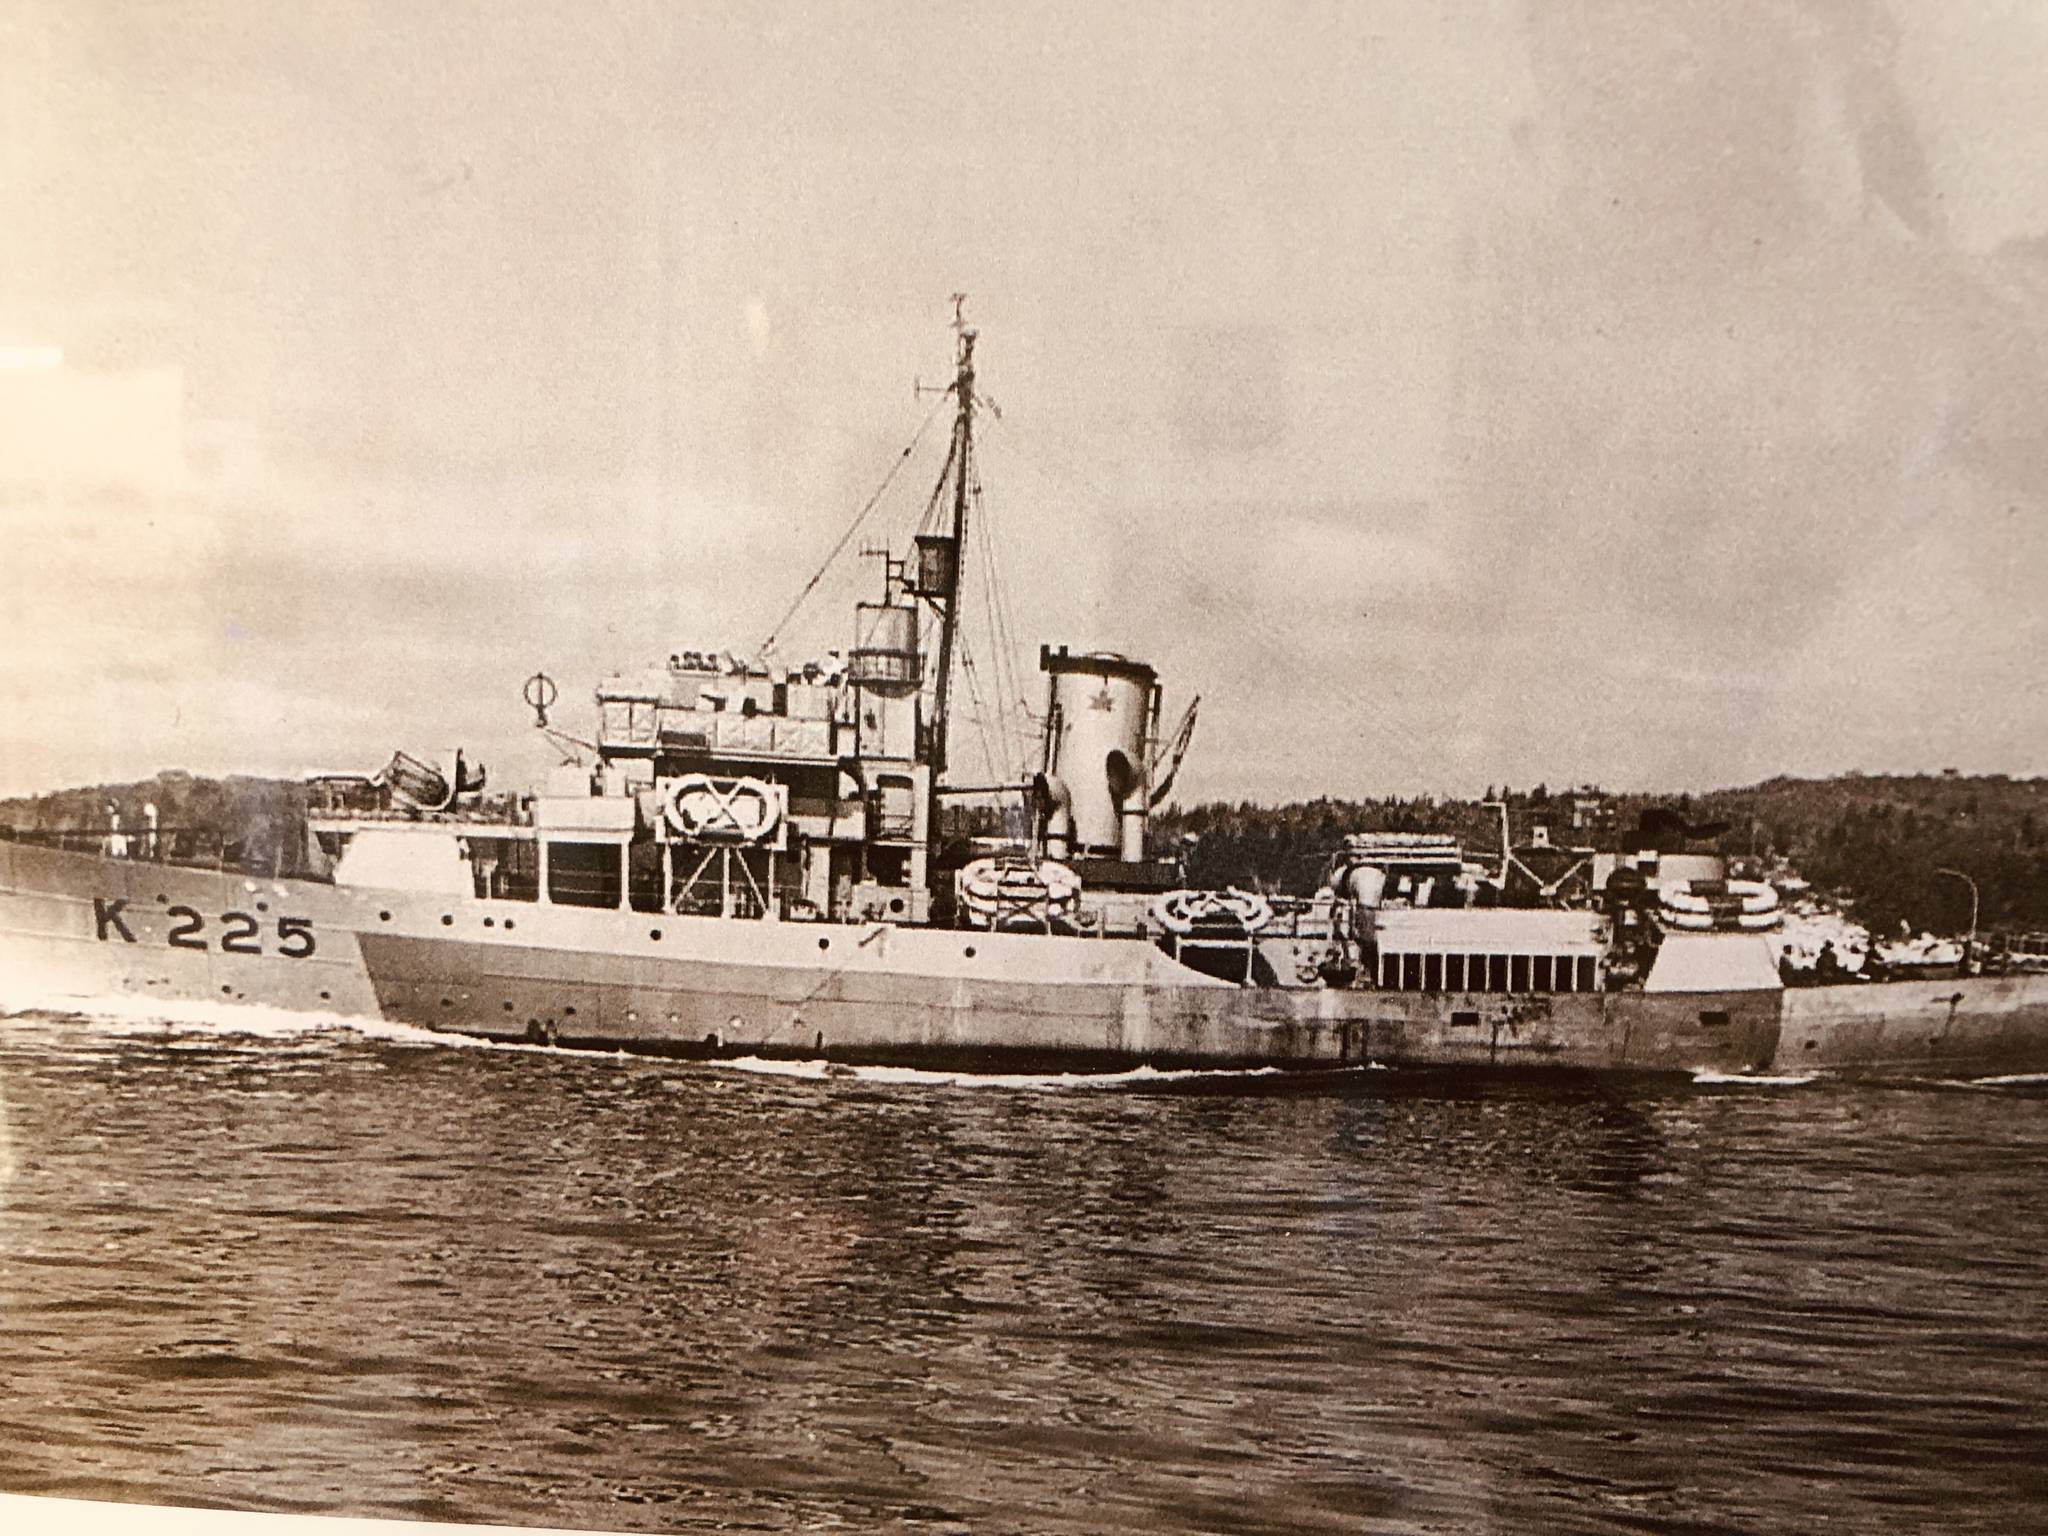 17092486_web1_HMCS-Kitchener-sepia